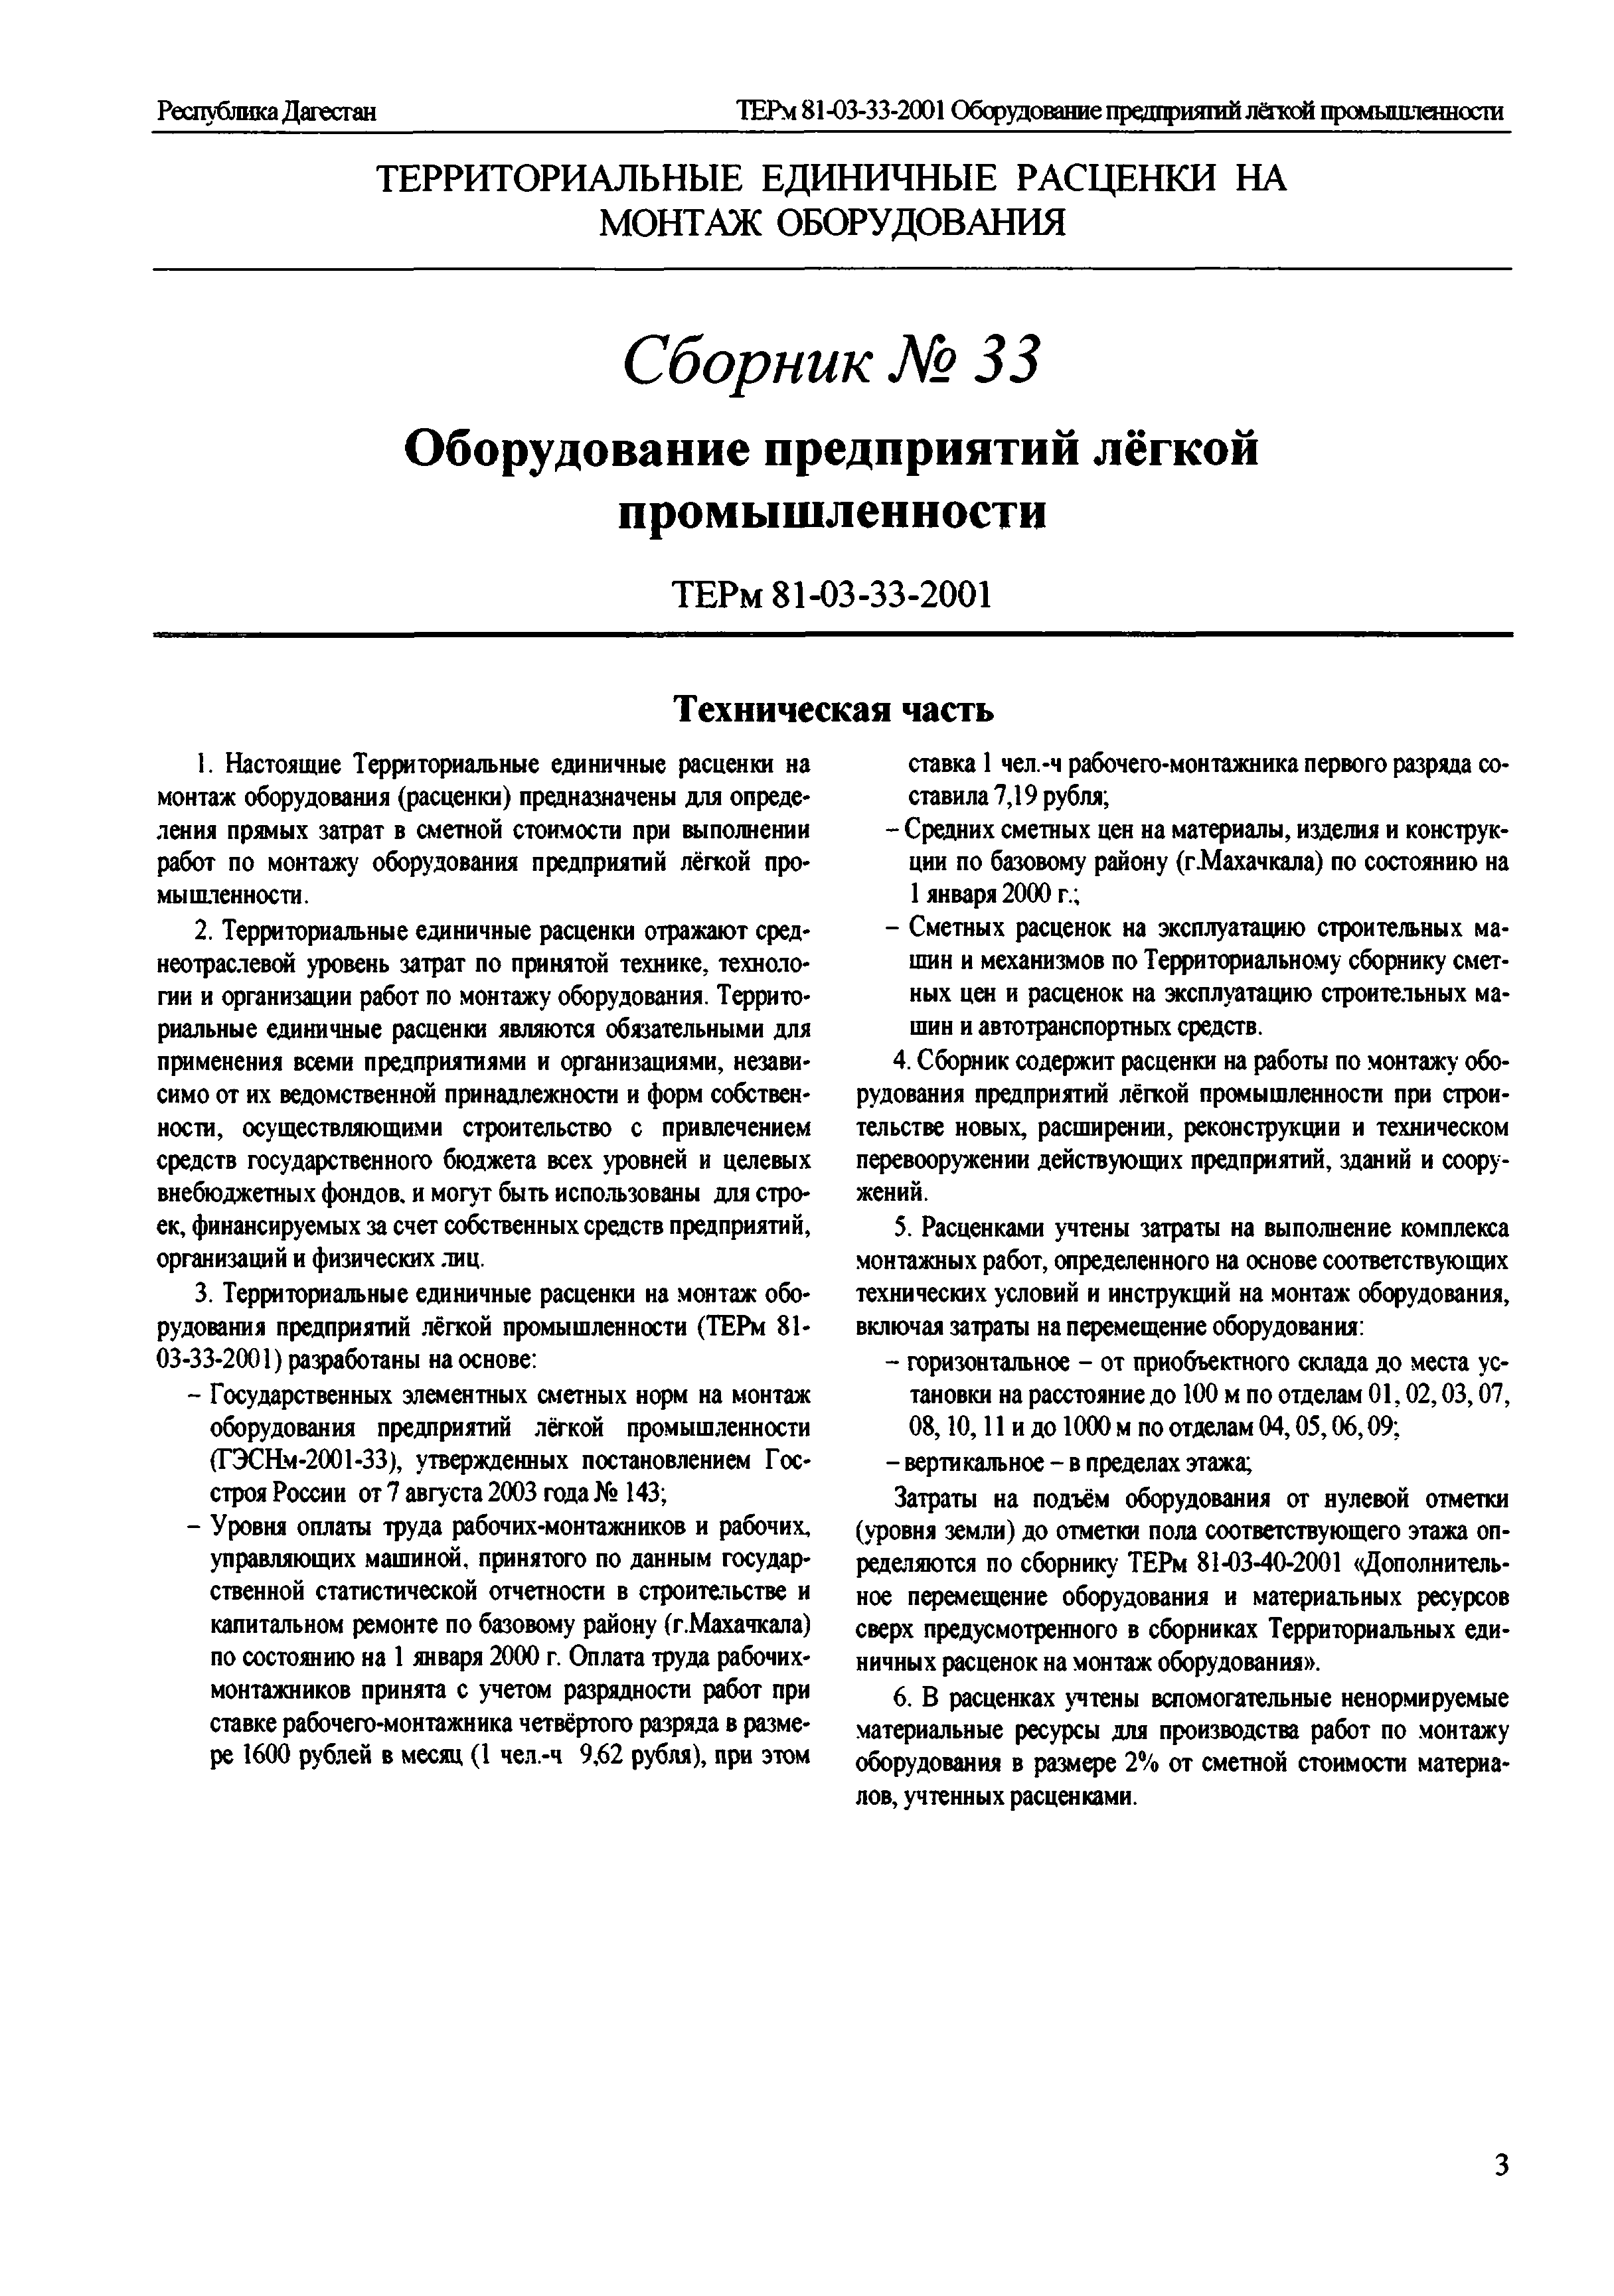 ТЕРм Республика Дагестан 2001-33